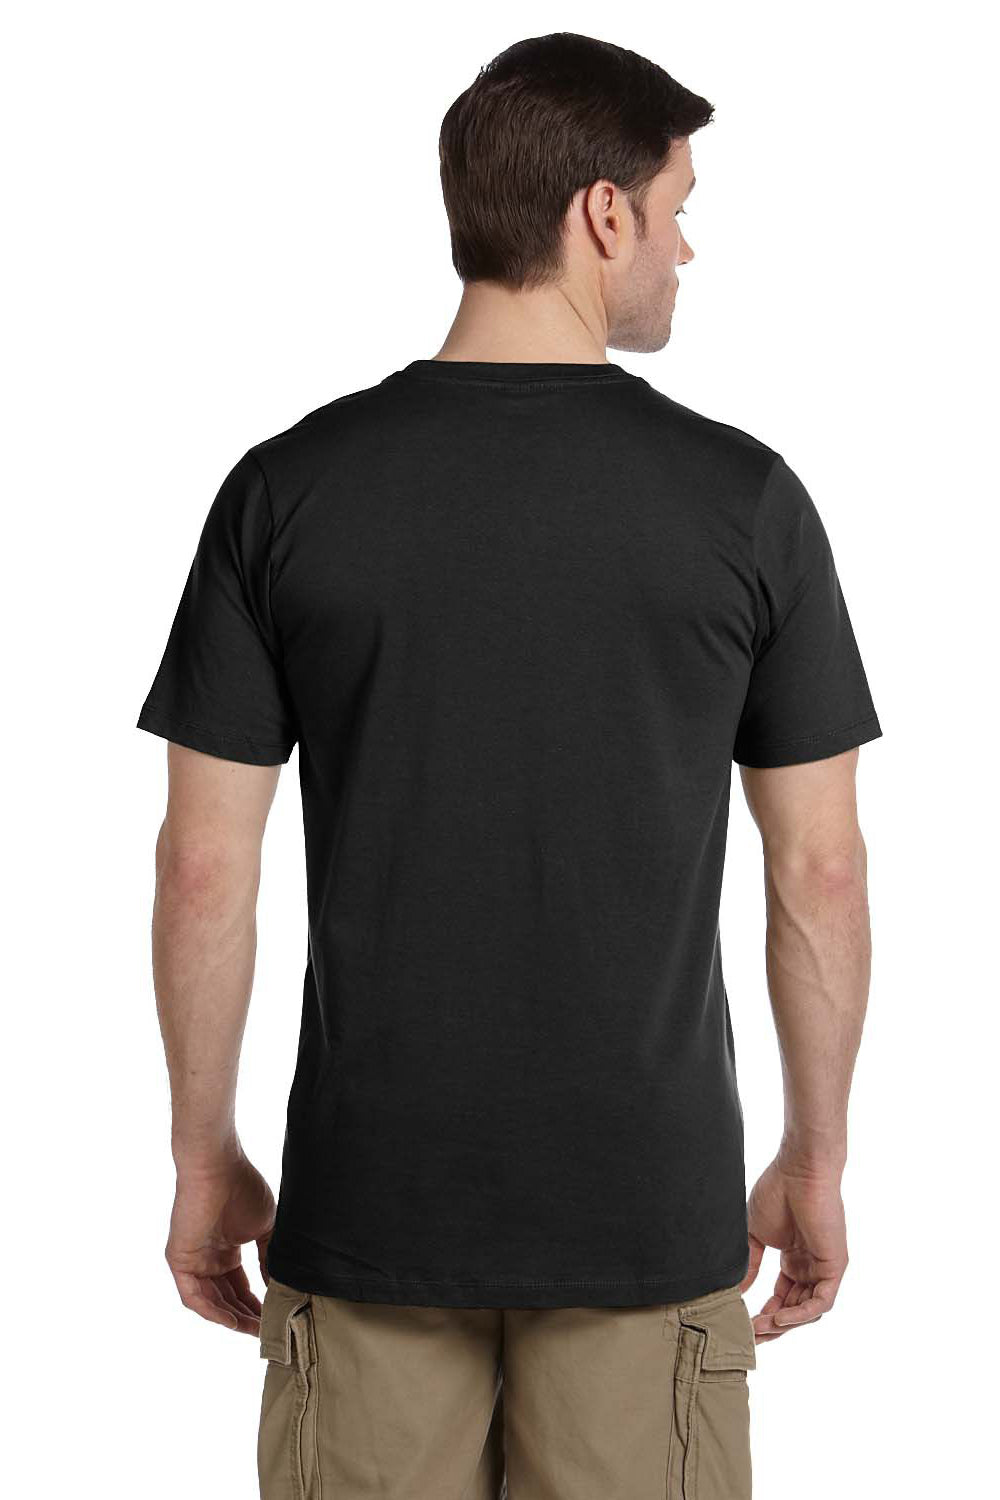 Econscious EC1075 Mens Short Sleeve Crewneck T-Shirt Black Back